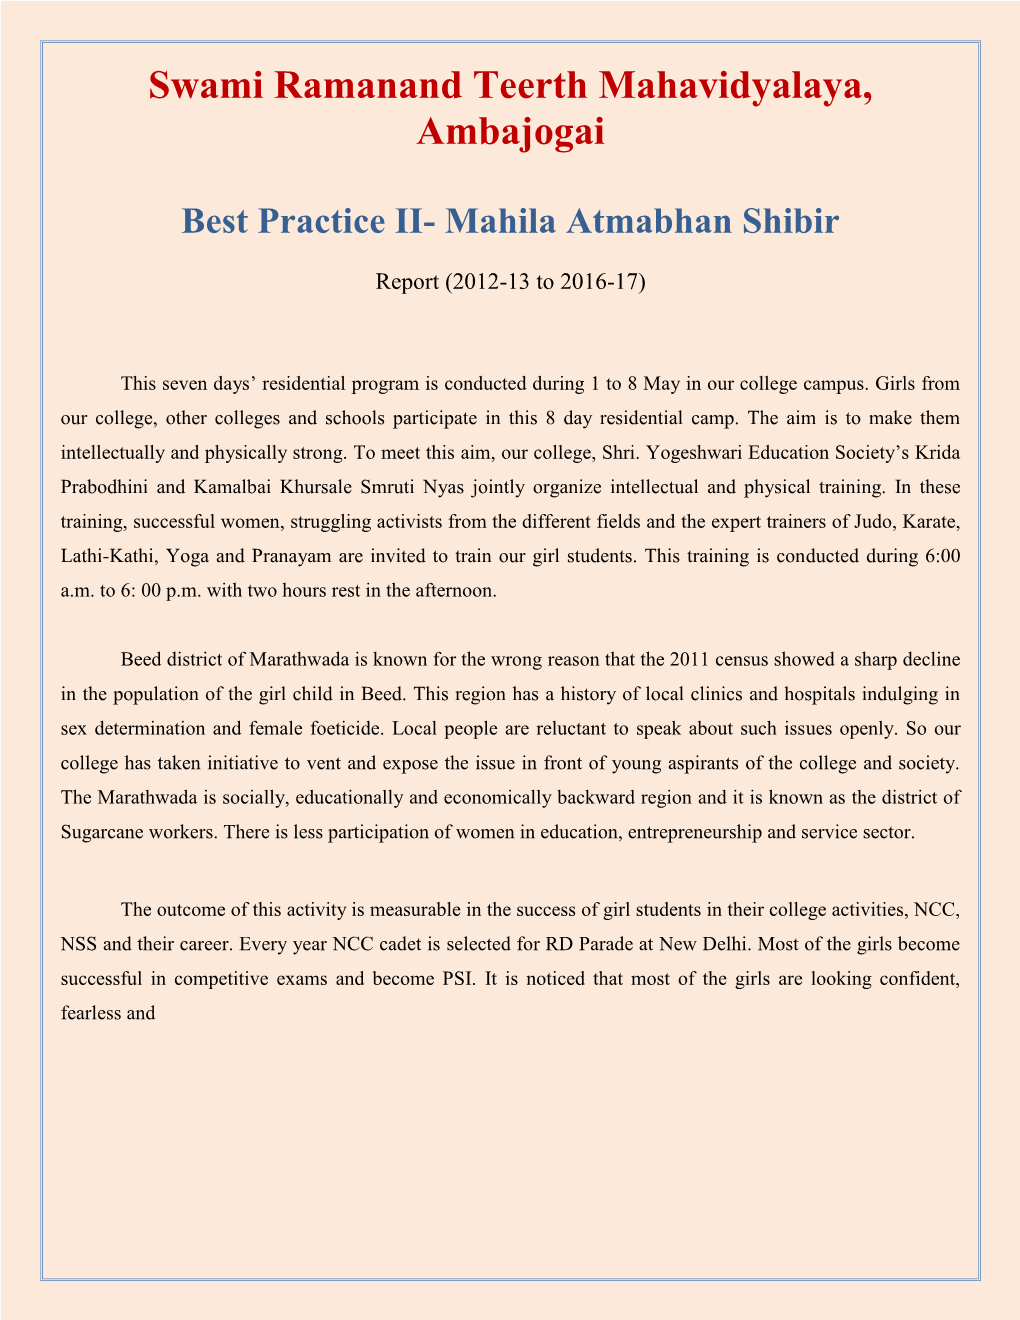 Best Practice II- Mahila Atmabhan Shibir